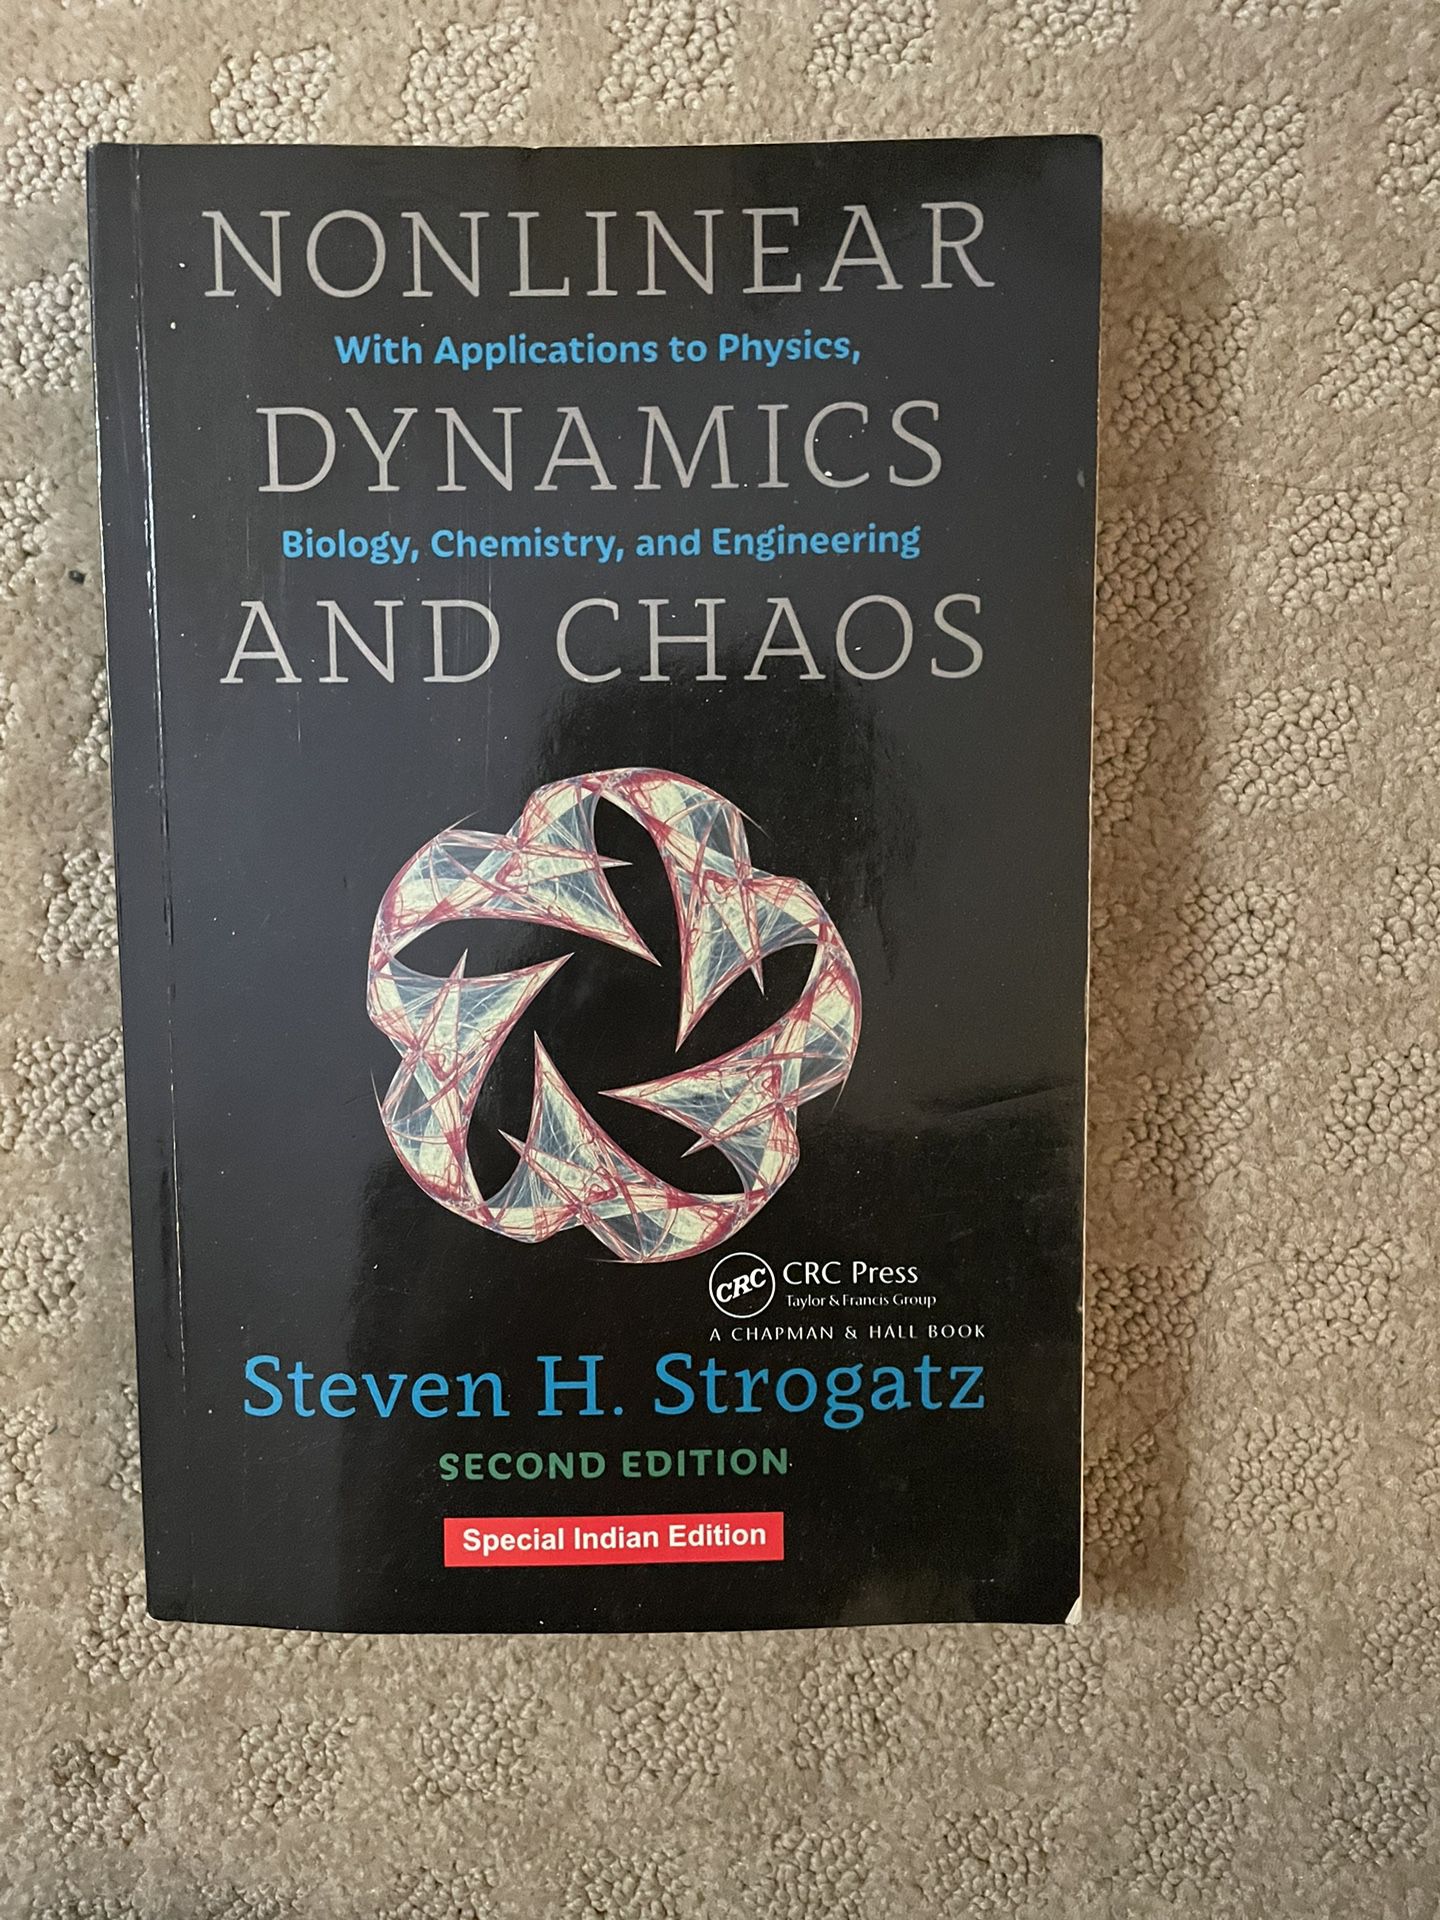 Nonlinear Dynamics and Chaos- Steven H Strogatz 2nd Edition